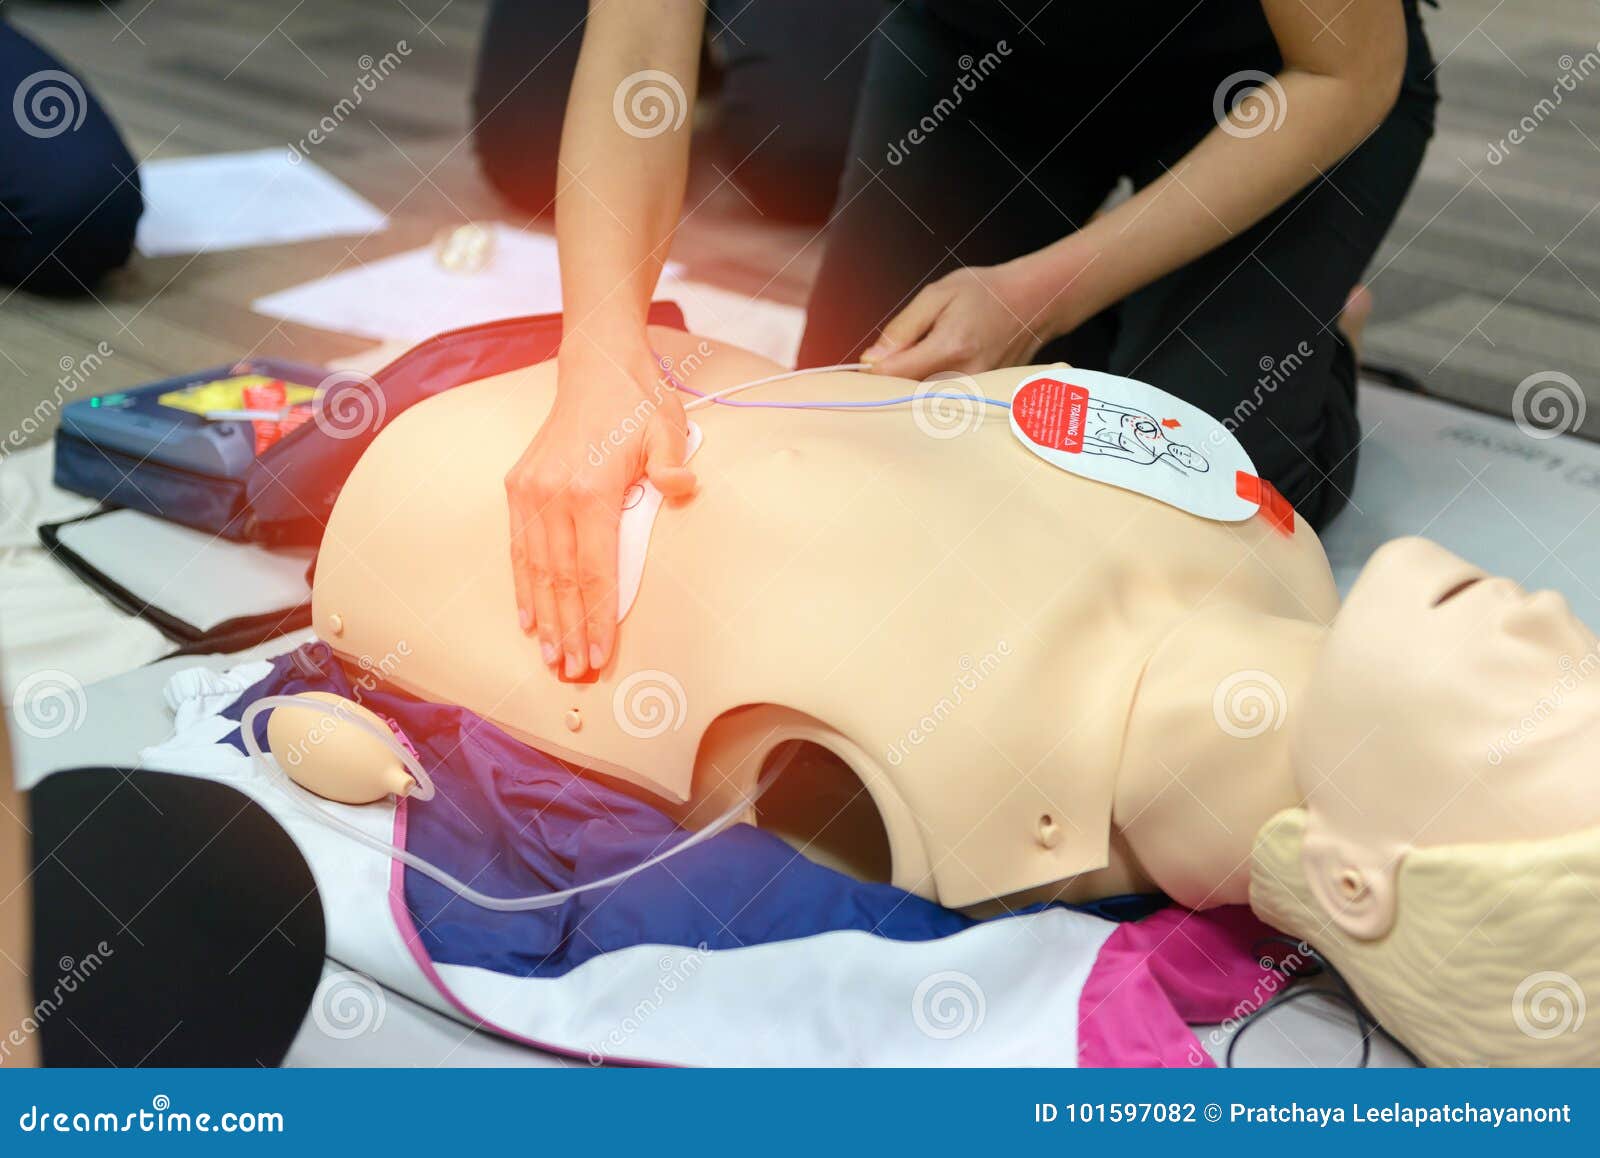 first aid cardiopulmonary resuscitation course using aed training.